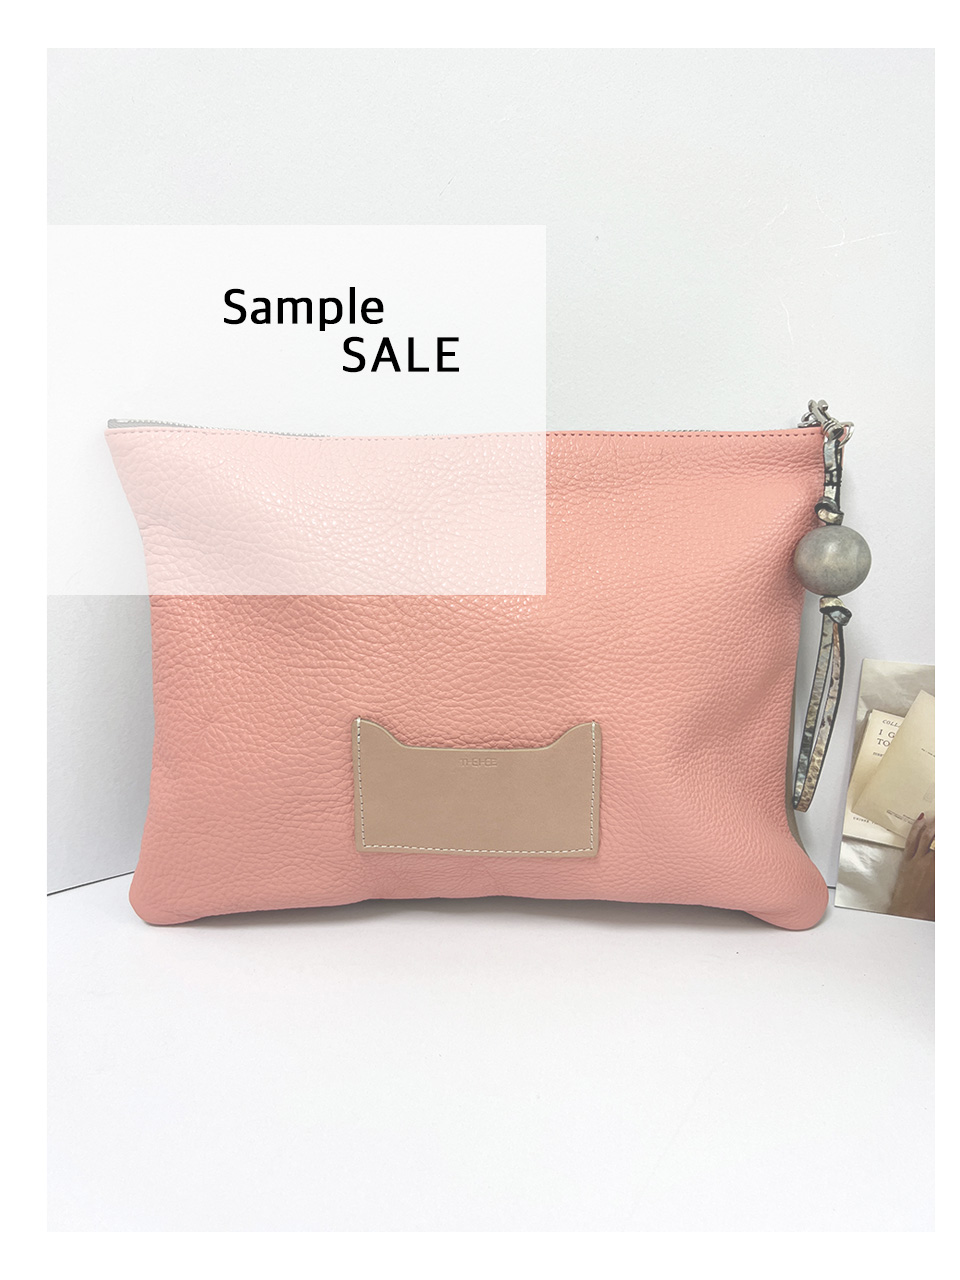 sample sale  핑크 그레이 클러치백